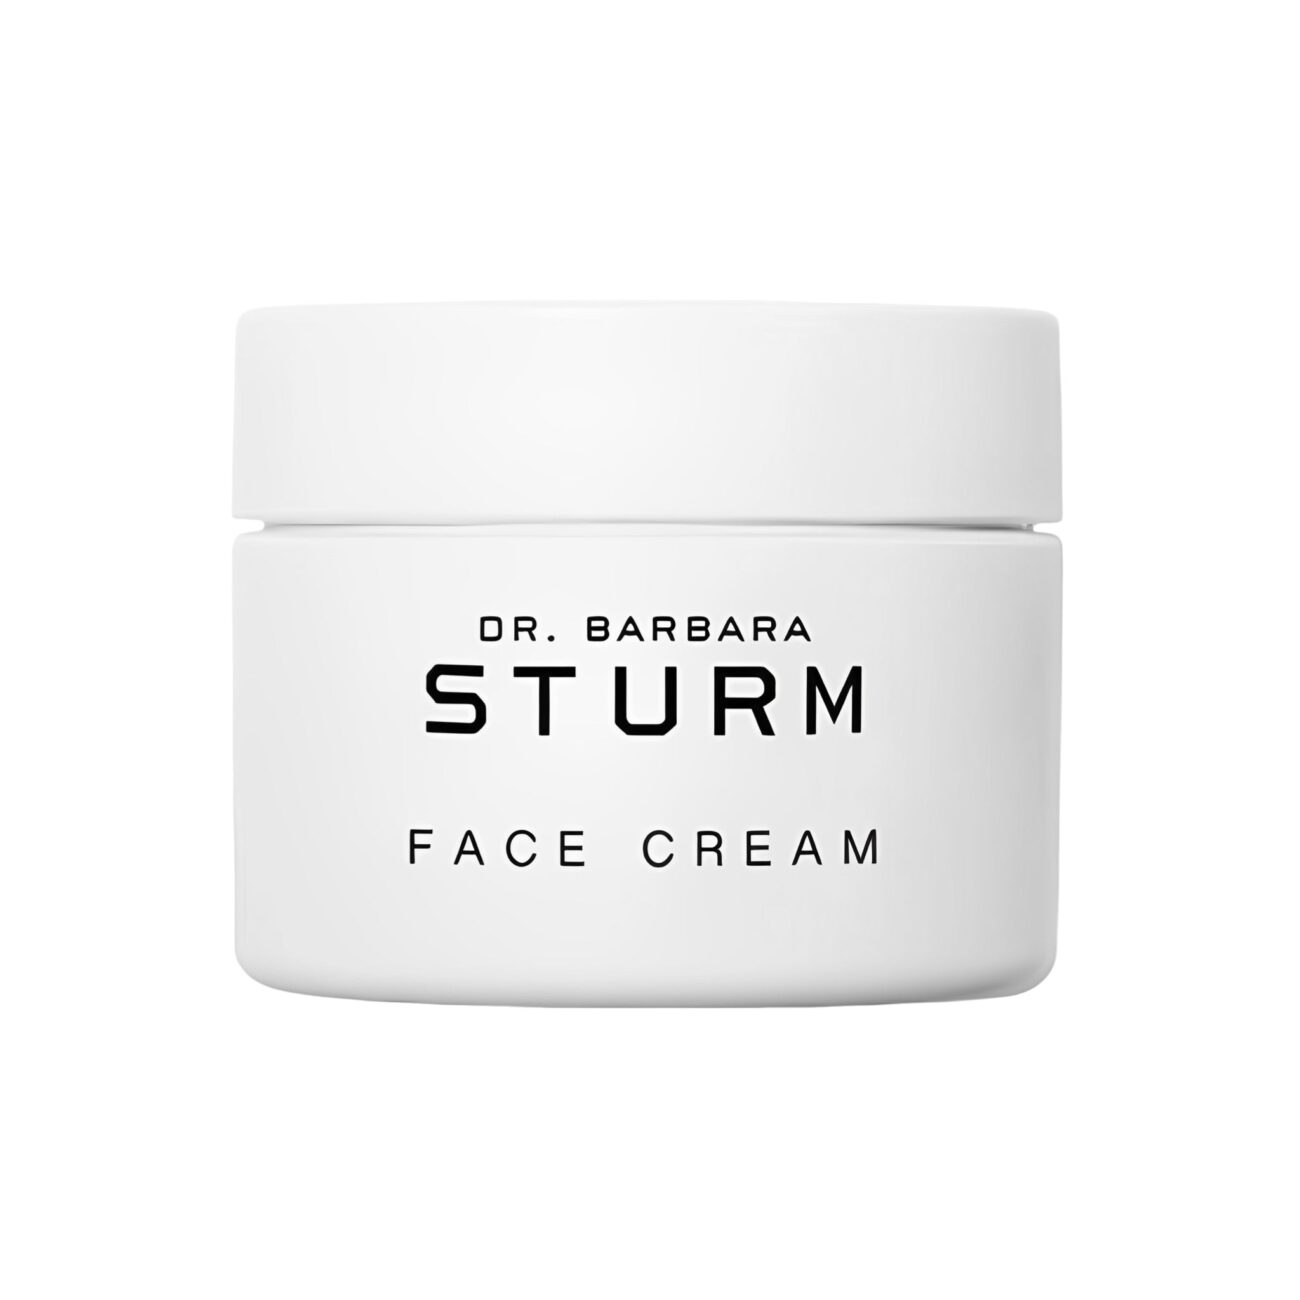 Face Cream trial size-Dr. Barbara Sturm